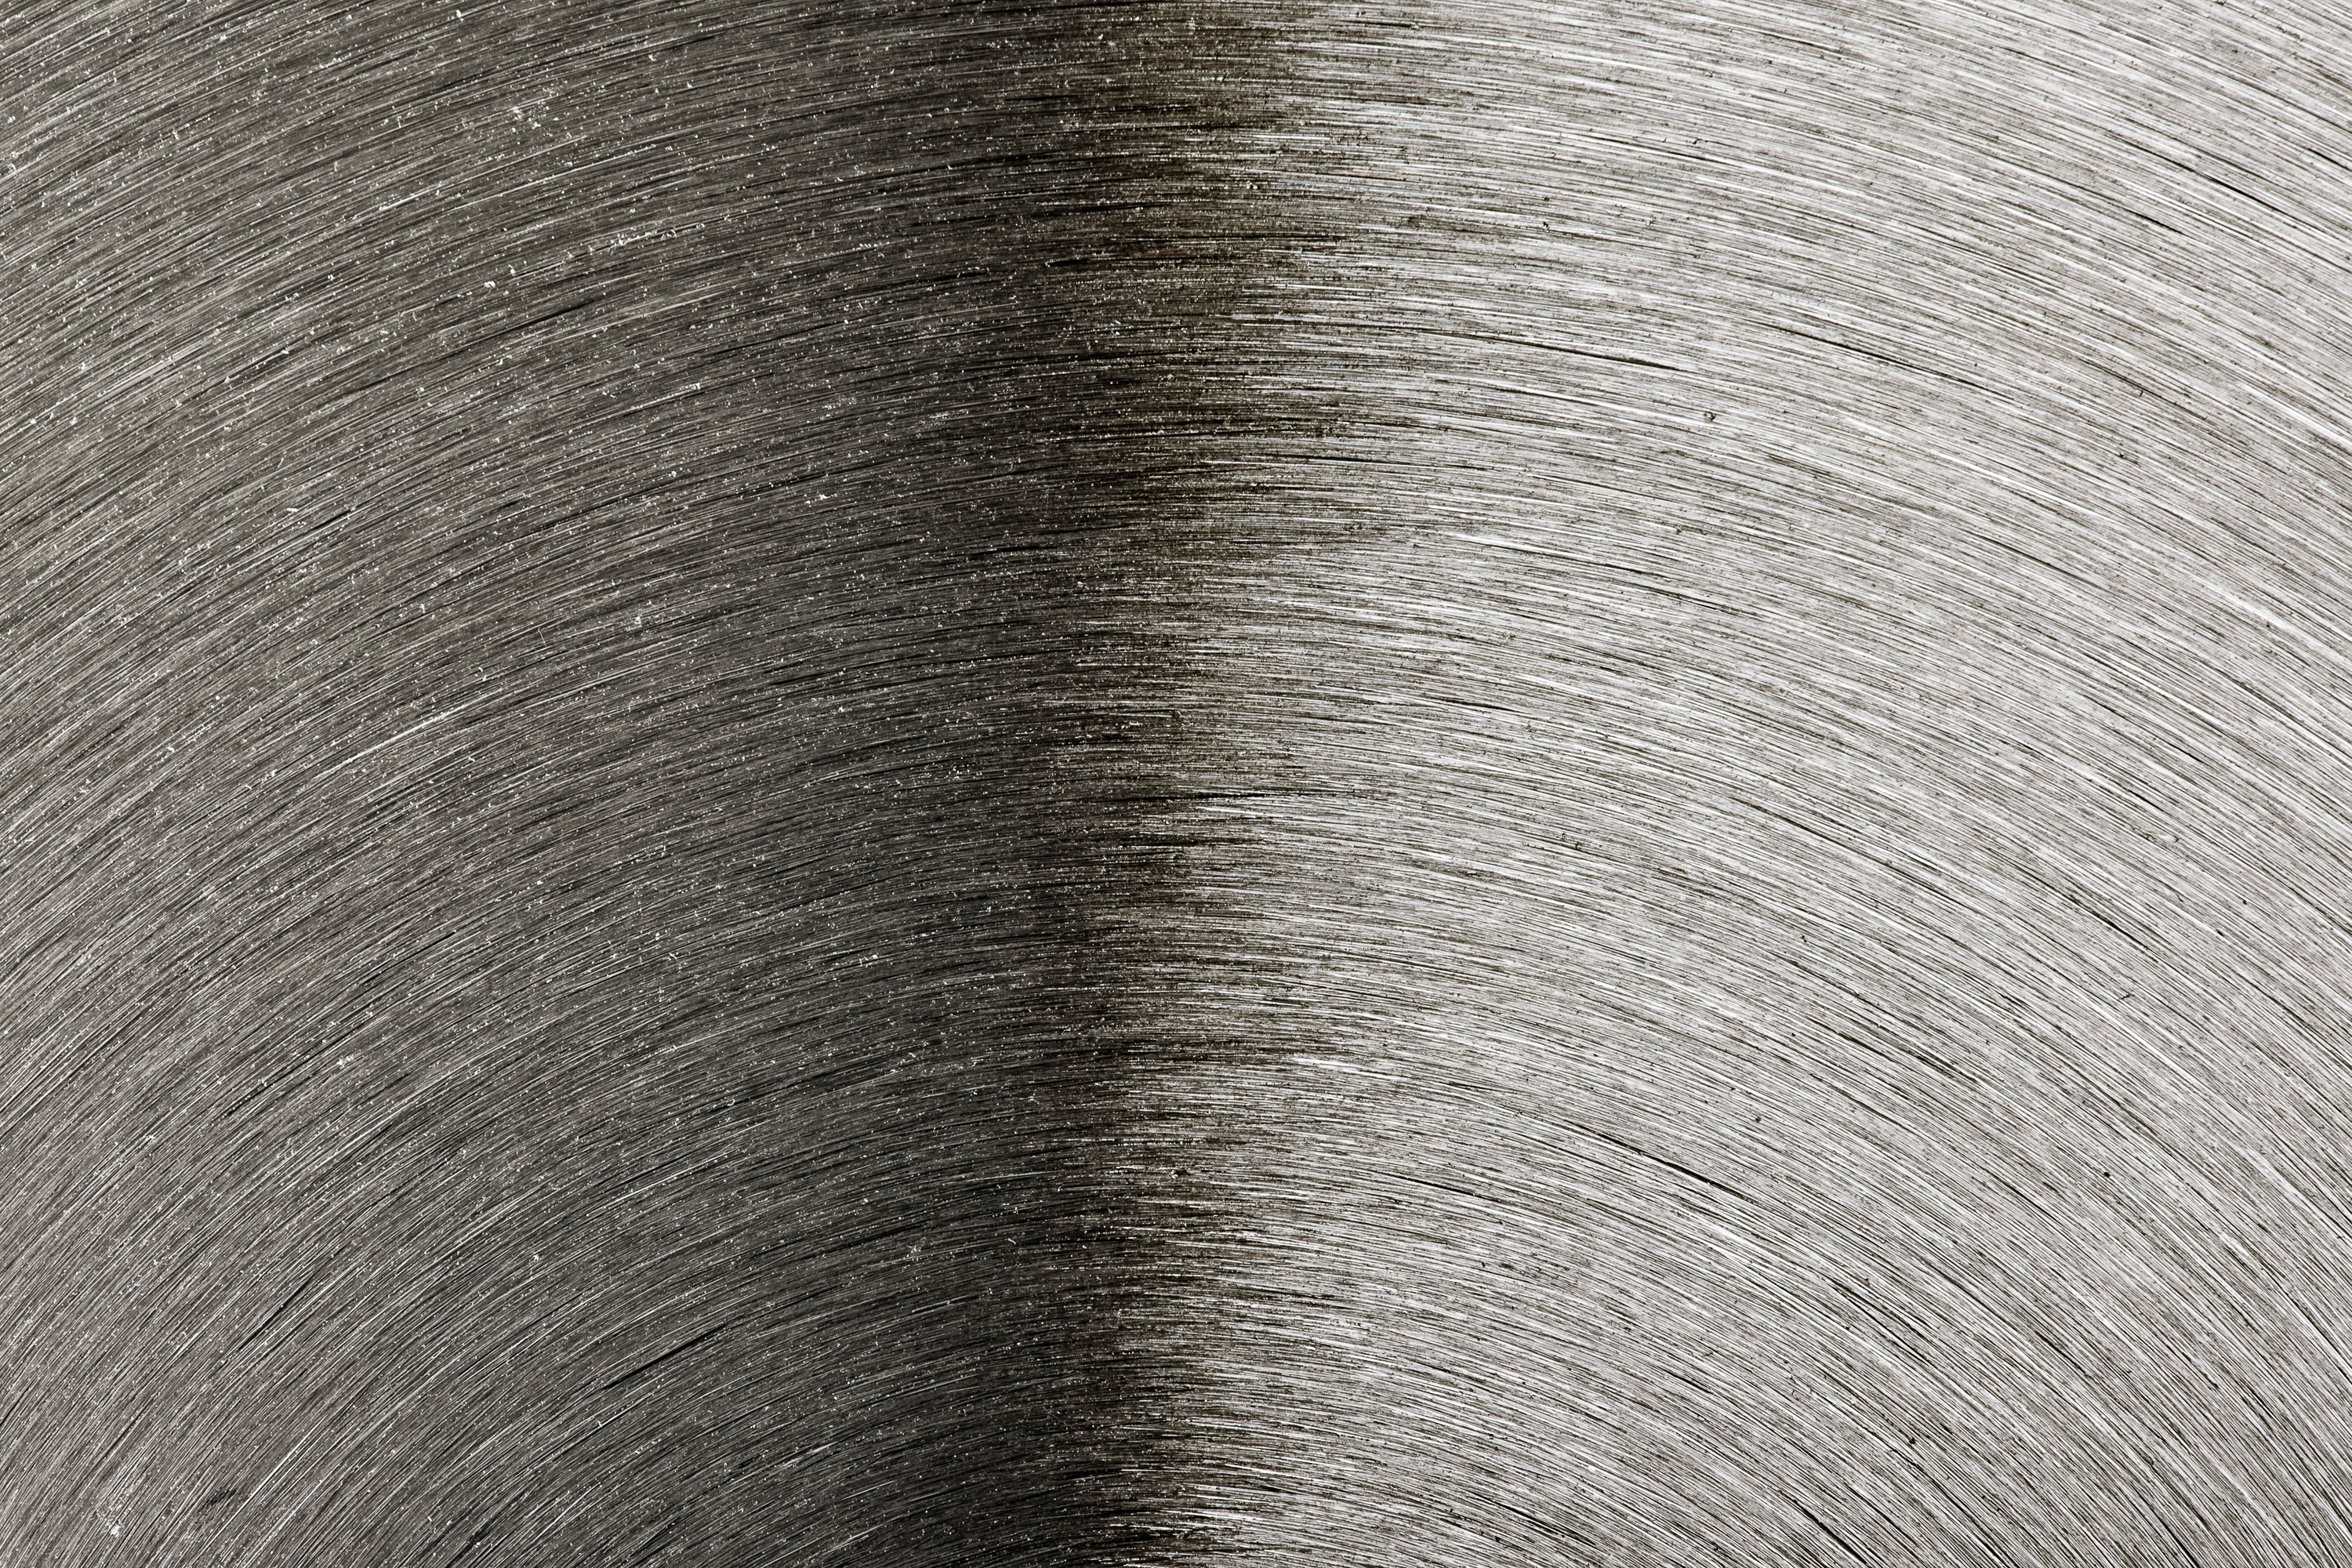 Brushed metal texture photo